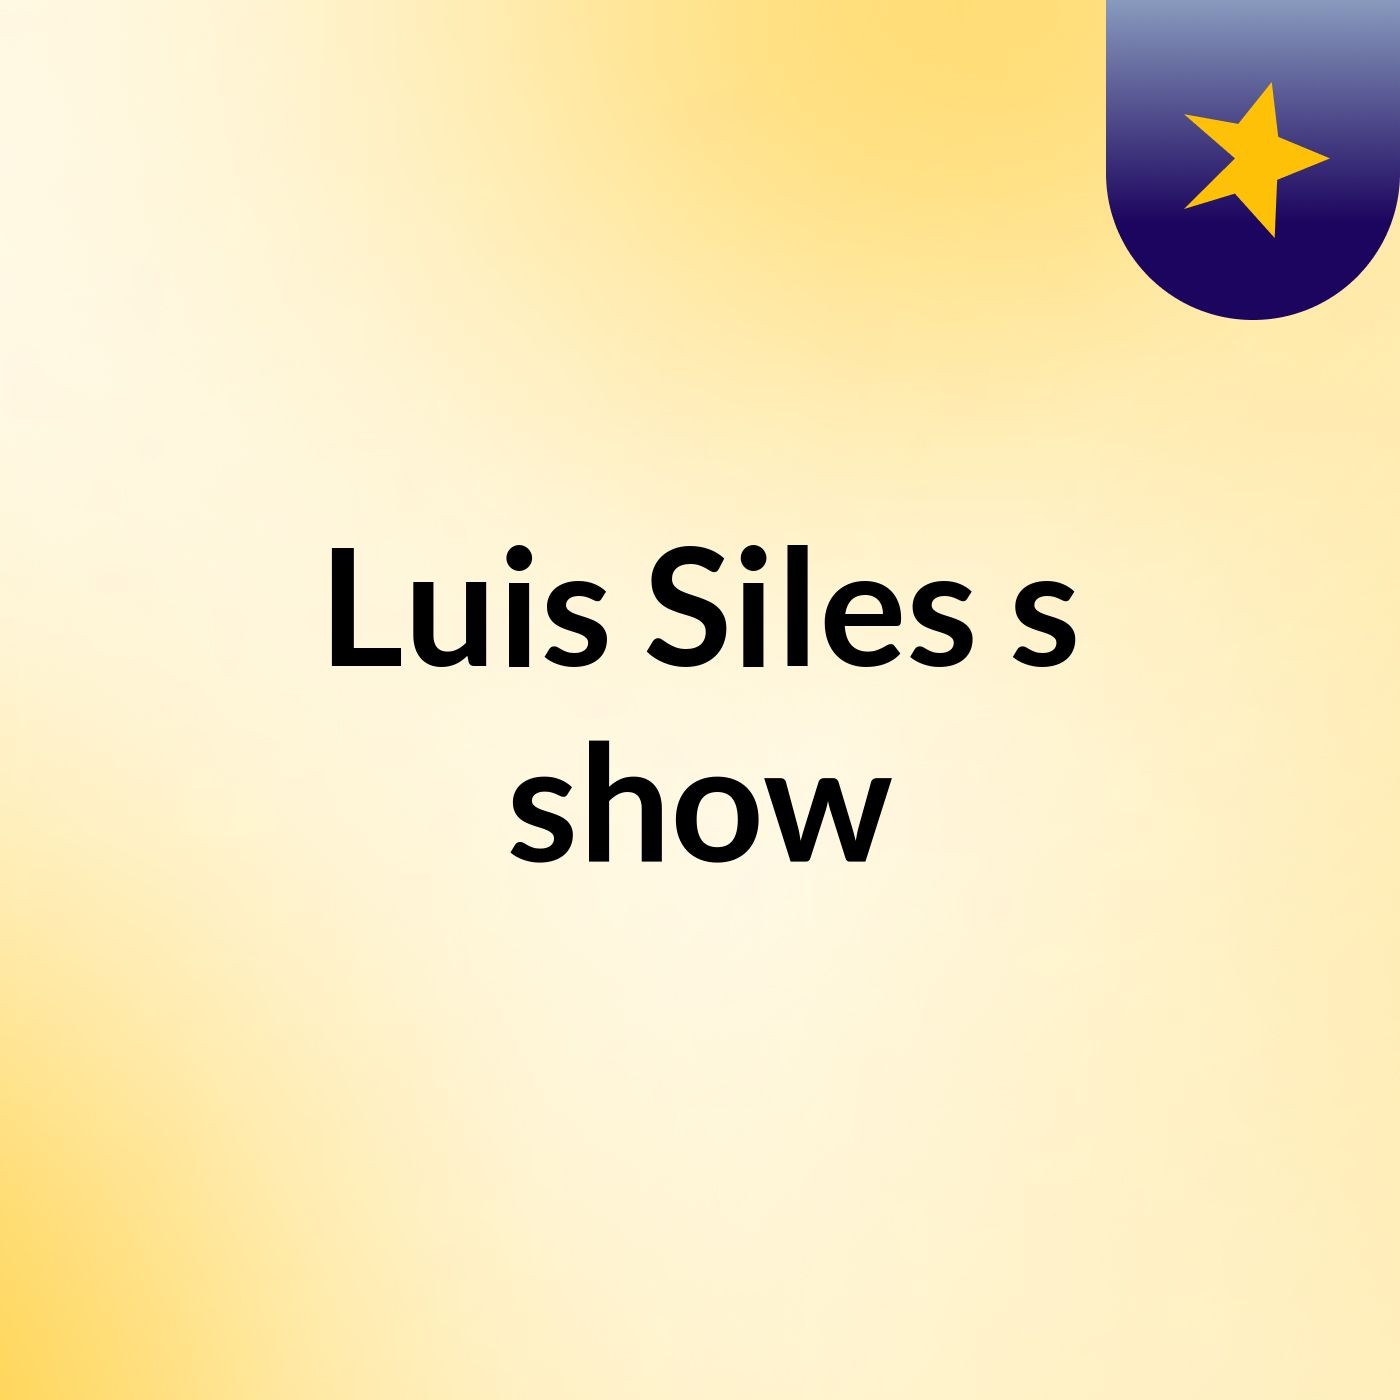 Luis Siles's show